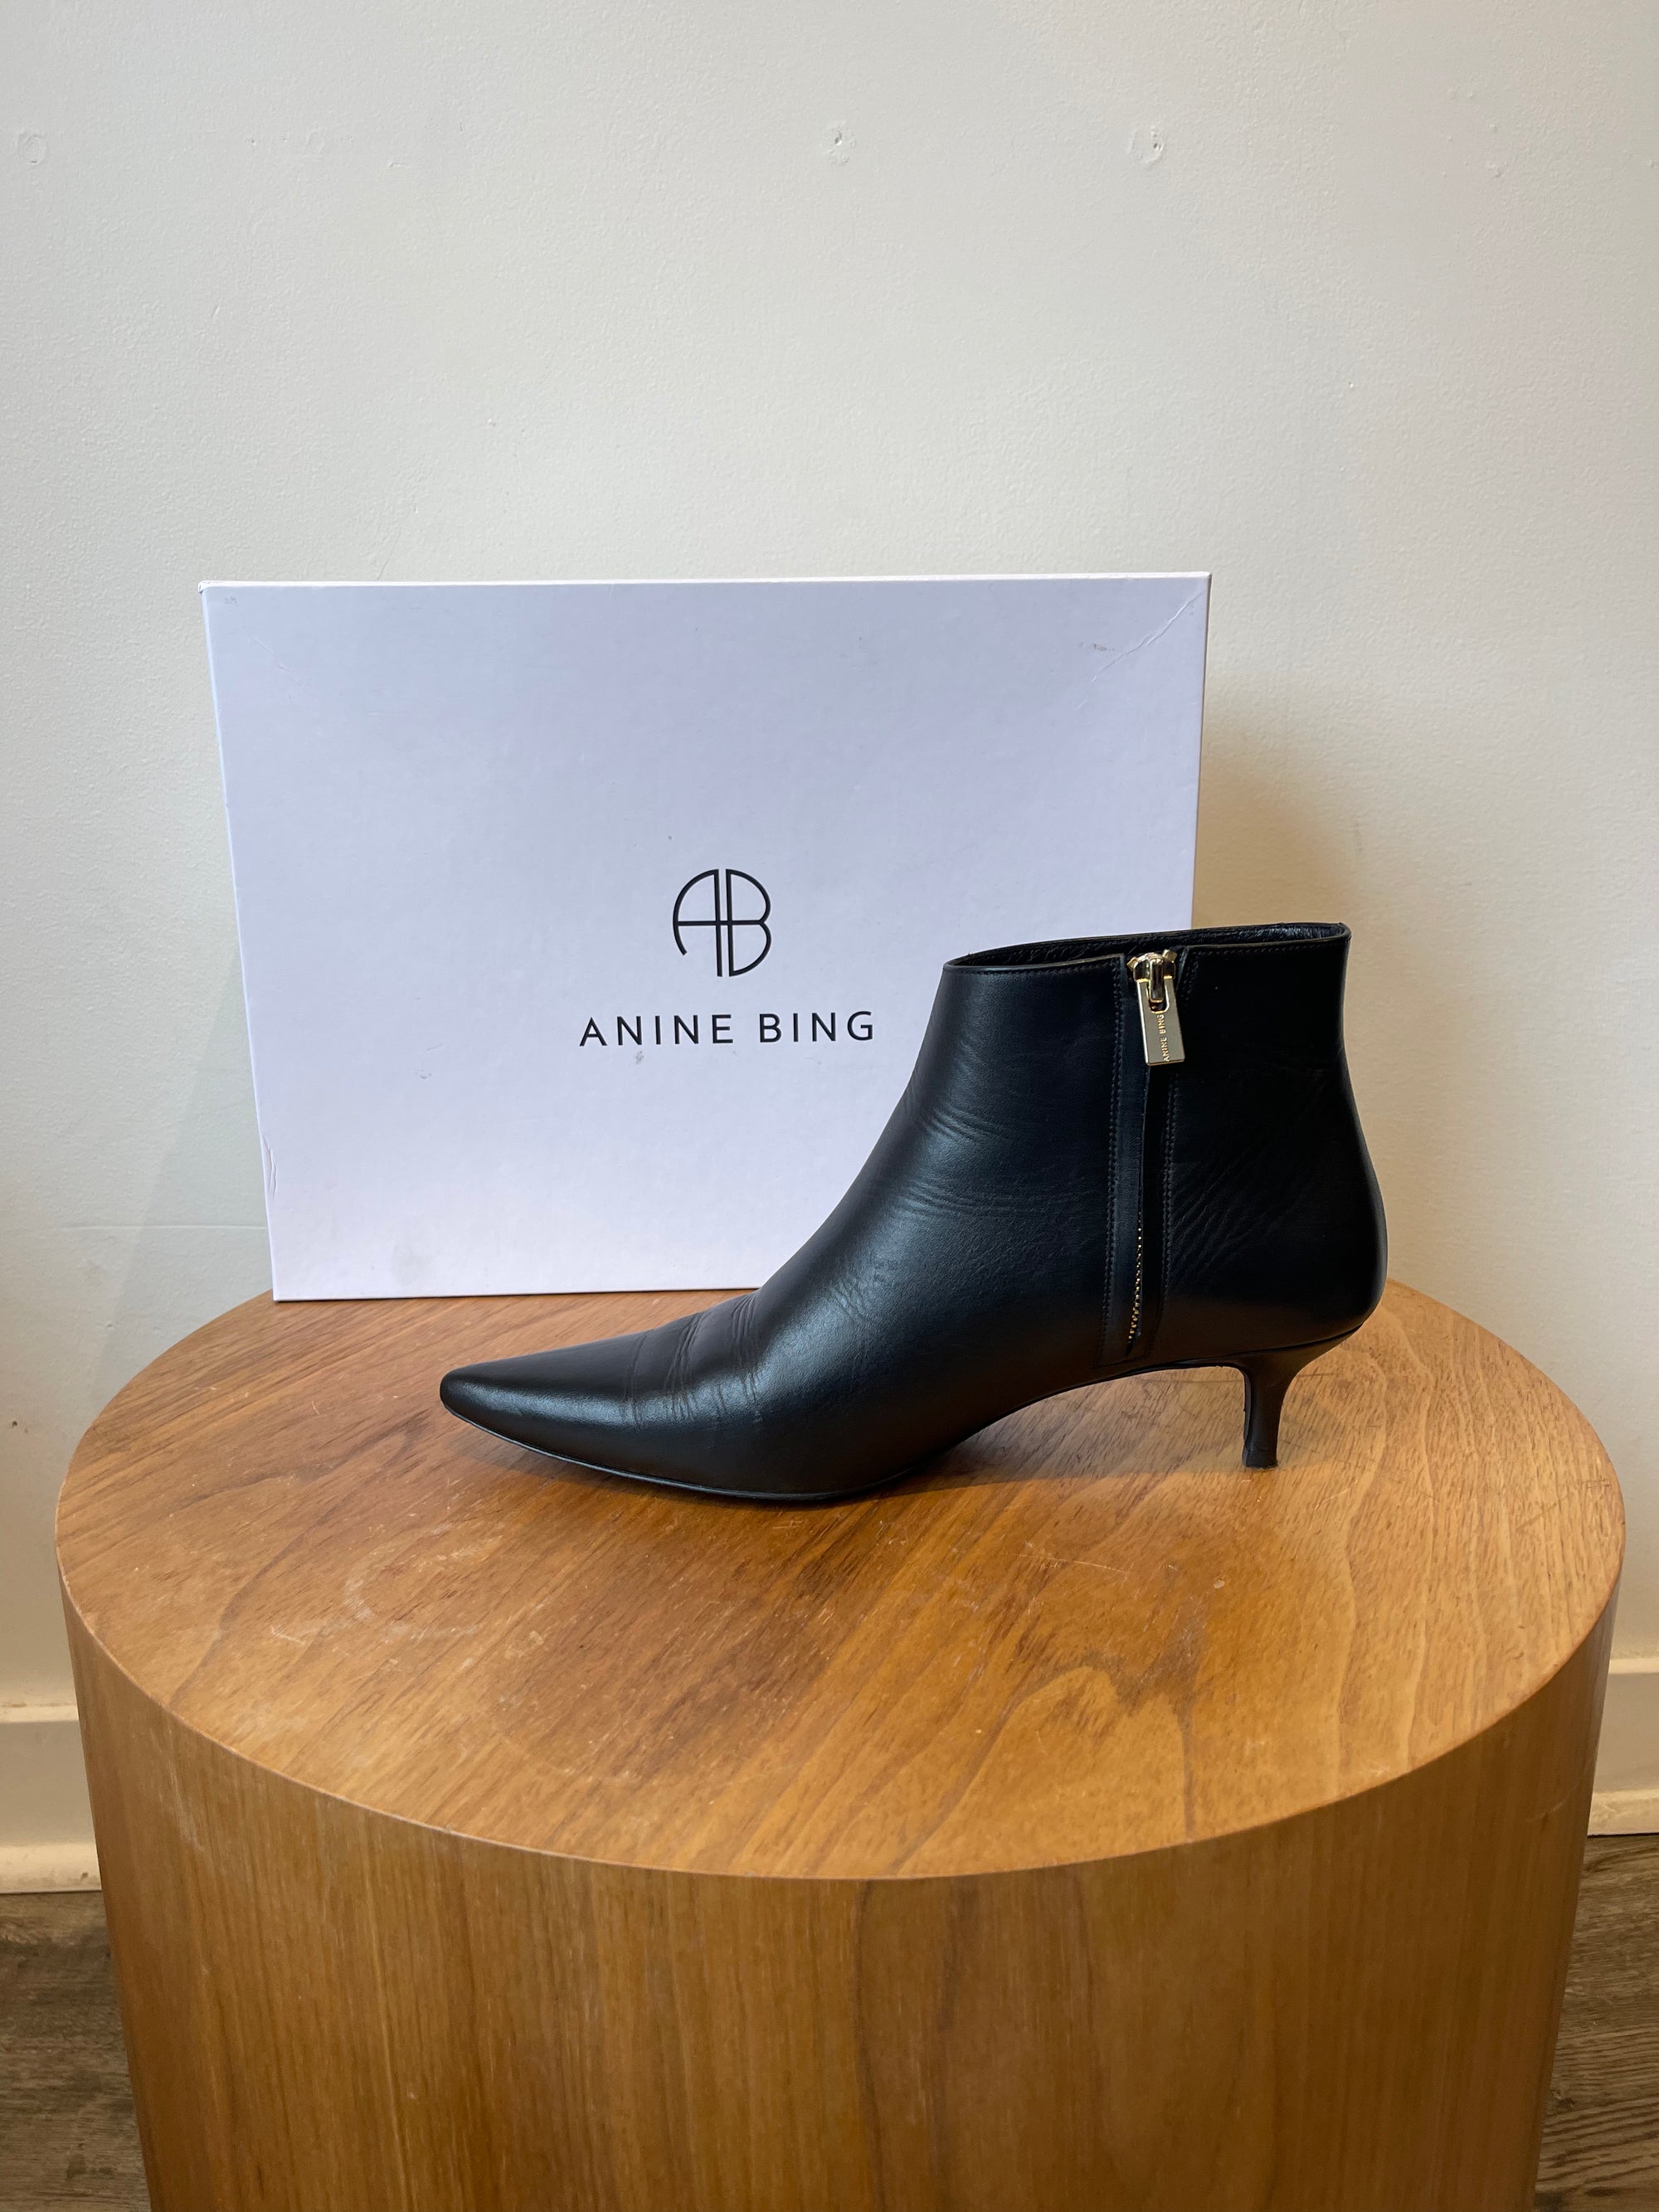 Anine Bing Black Kitten Heel Boots, Size 39